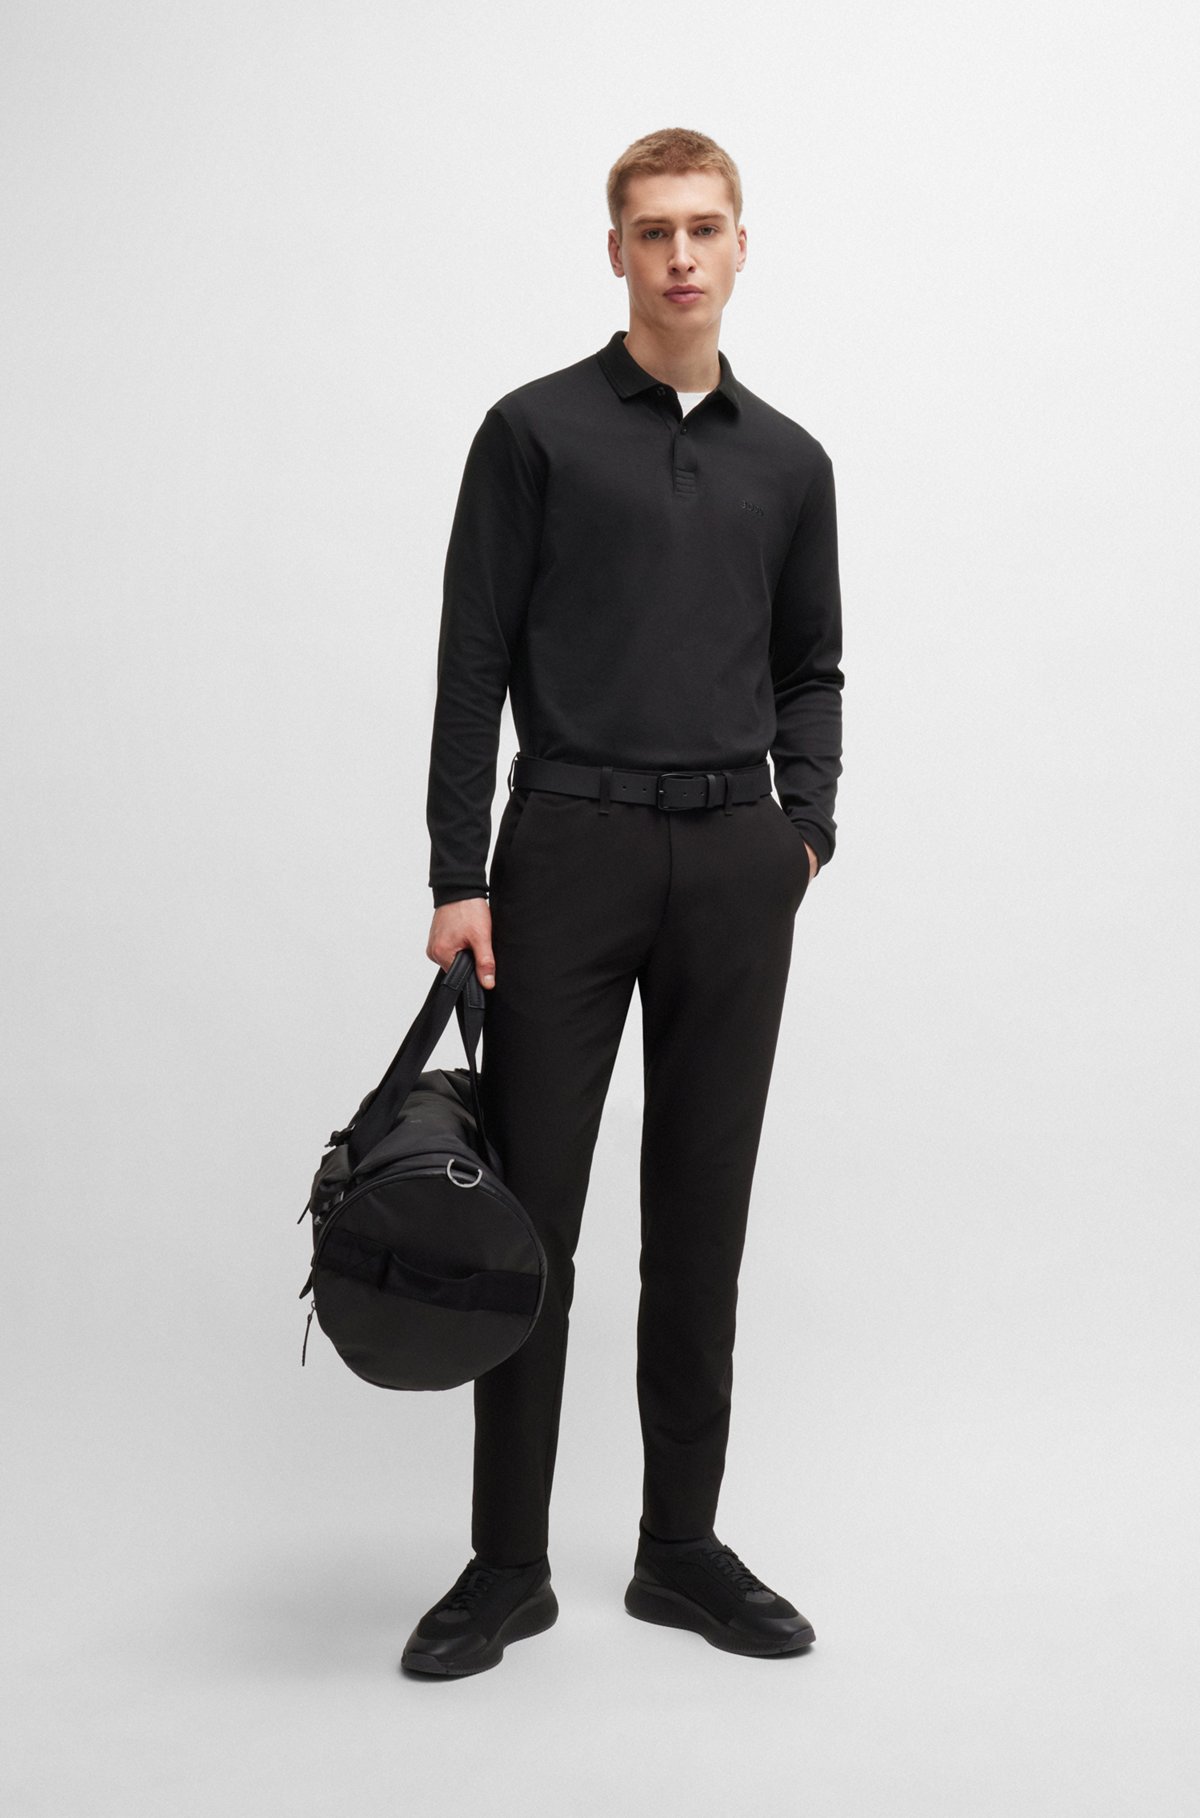 Interlock-cotton polo shirt with tonal logo, Black